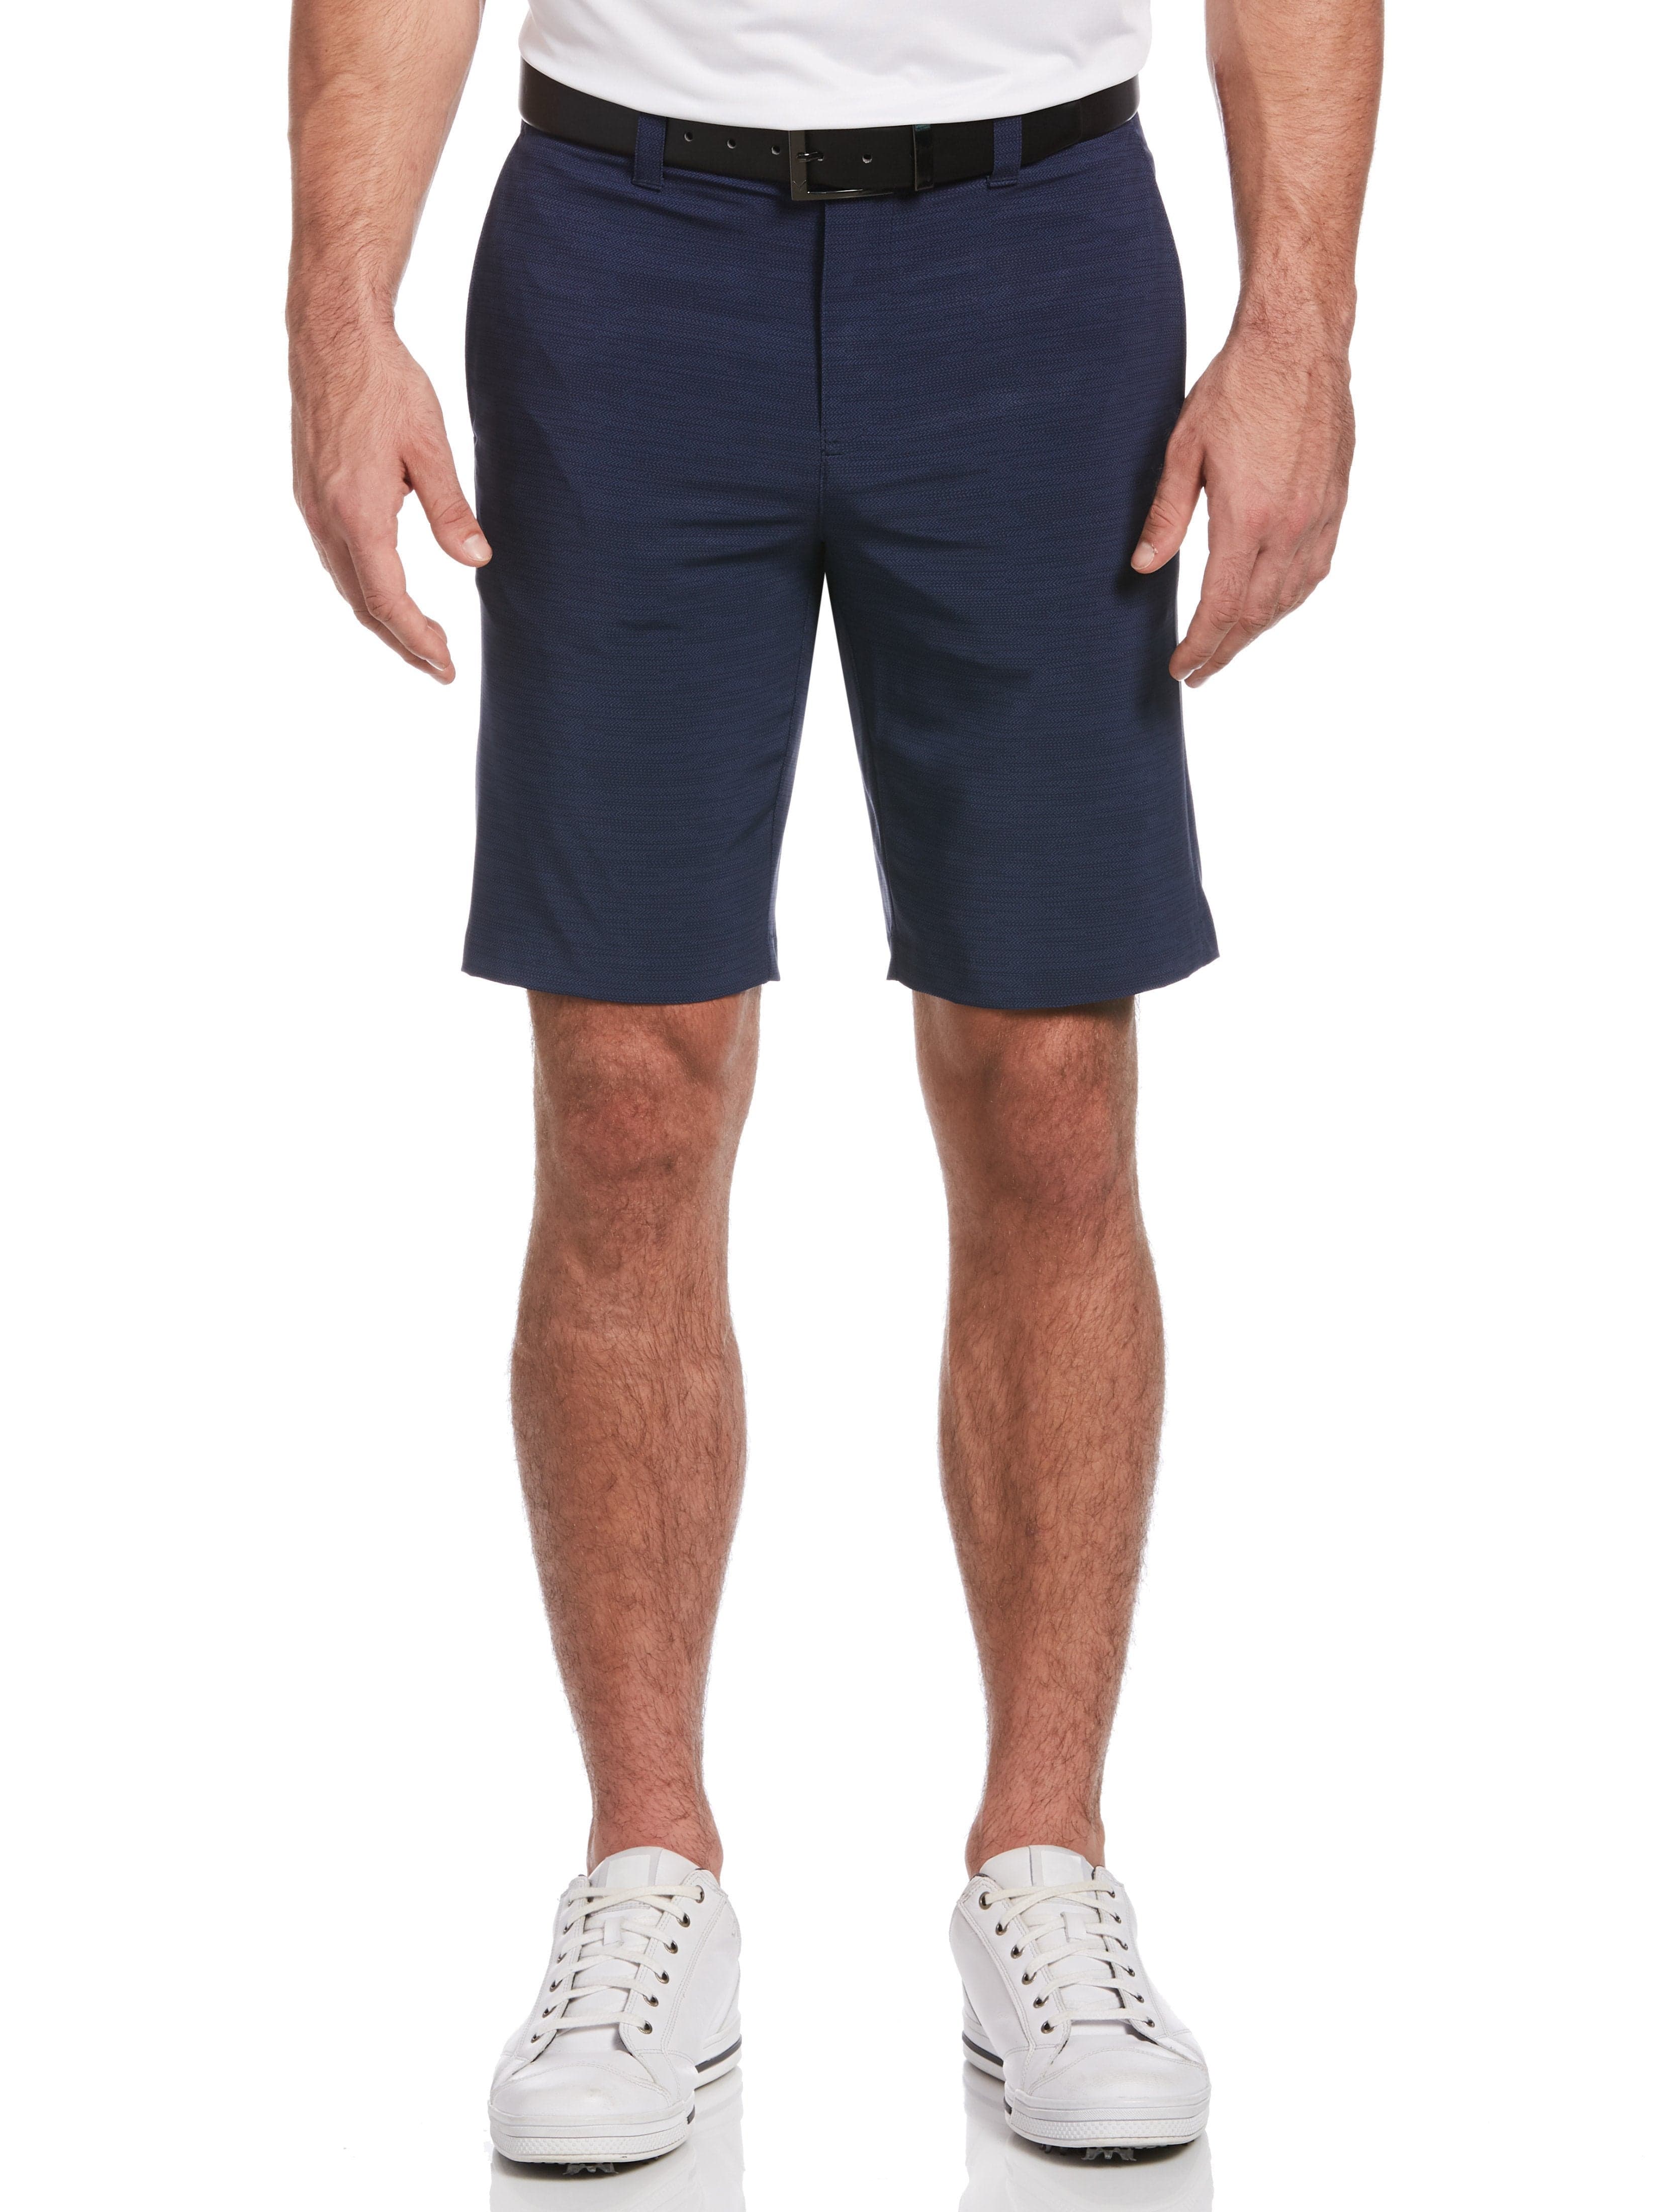 Callaway Apparel Mens Big & Tall Printed Herringbone Shorts, Size 46B, Navy Blue, Polyester/Elastane | Golf Apparel Shop